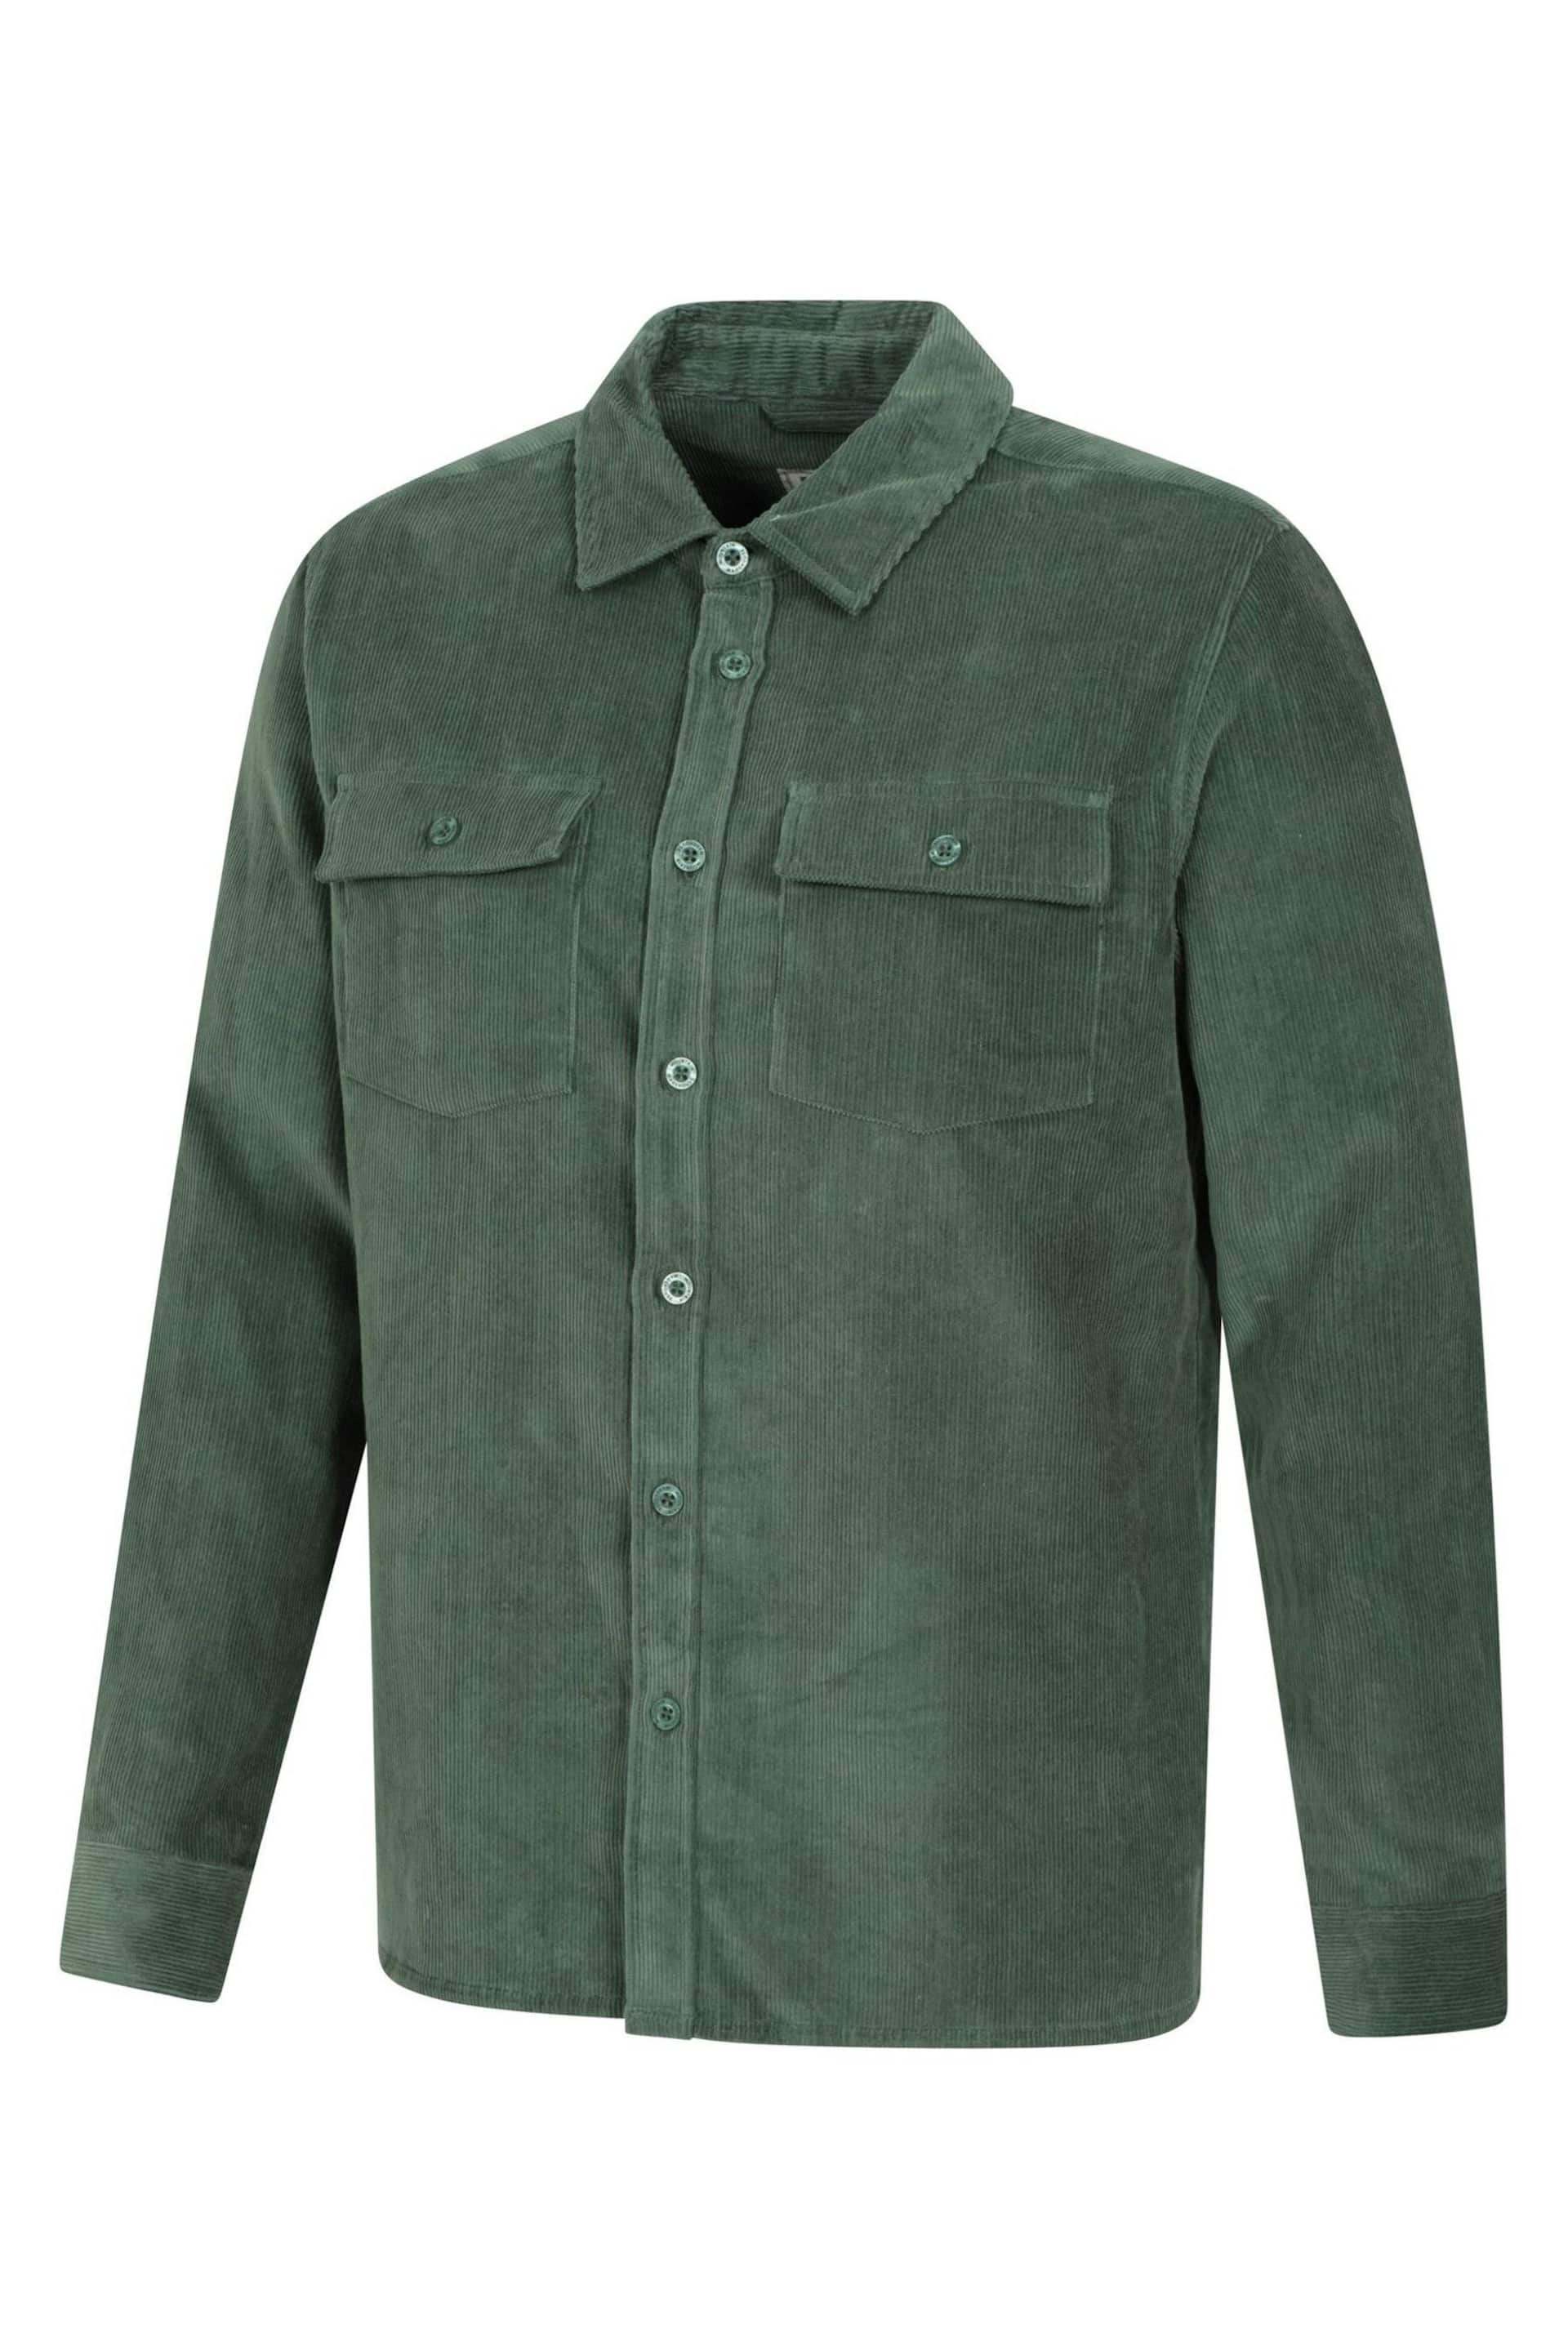 Mountain Warehouse Green Mens Farrow Cord Long Sleeve Shirt - Image 5 of 5